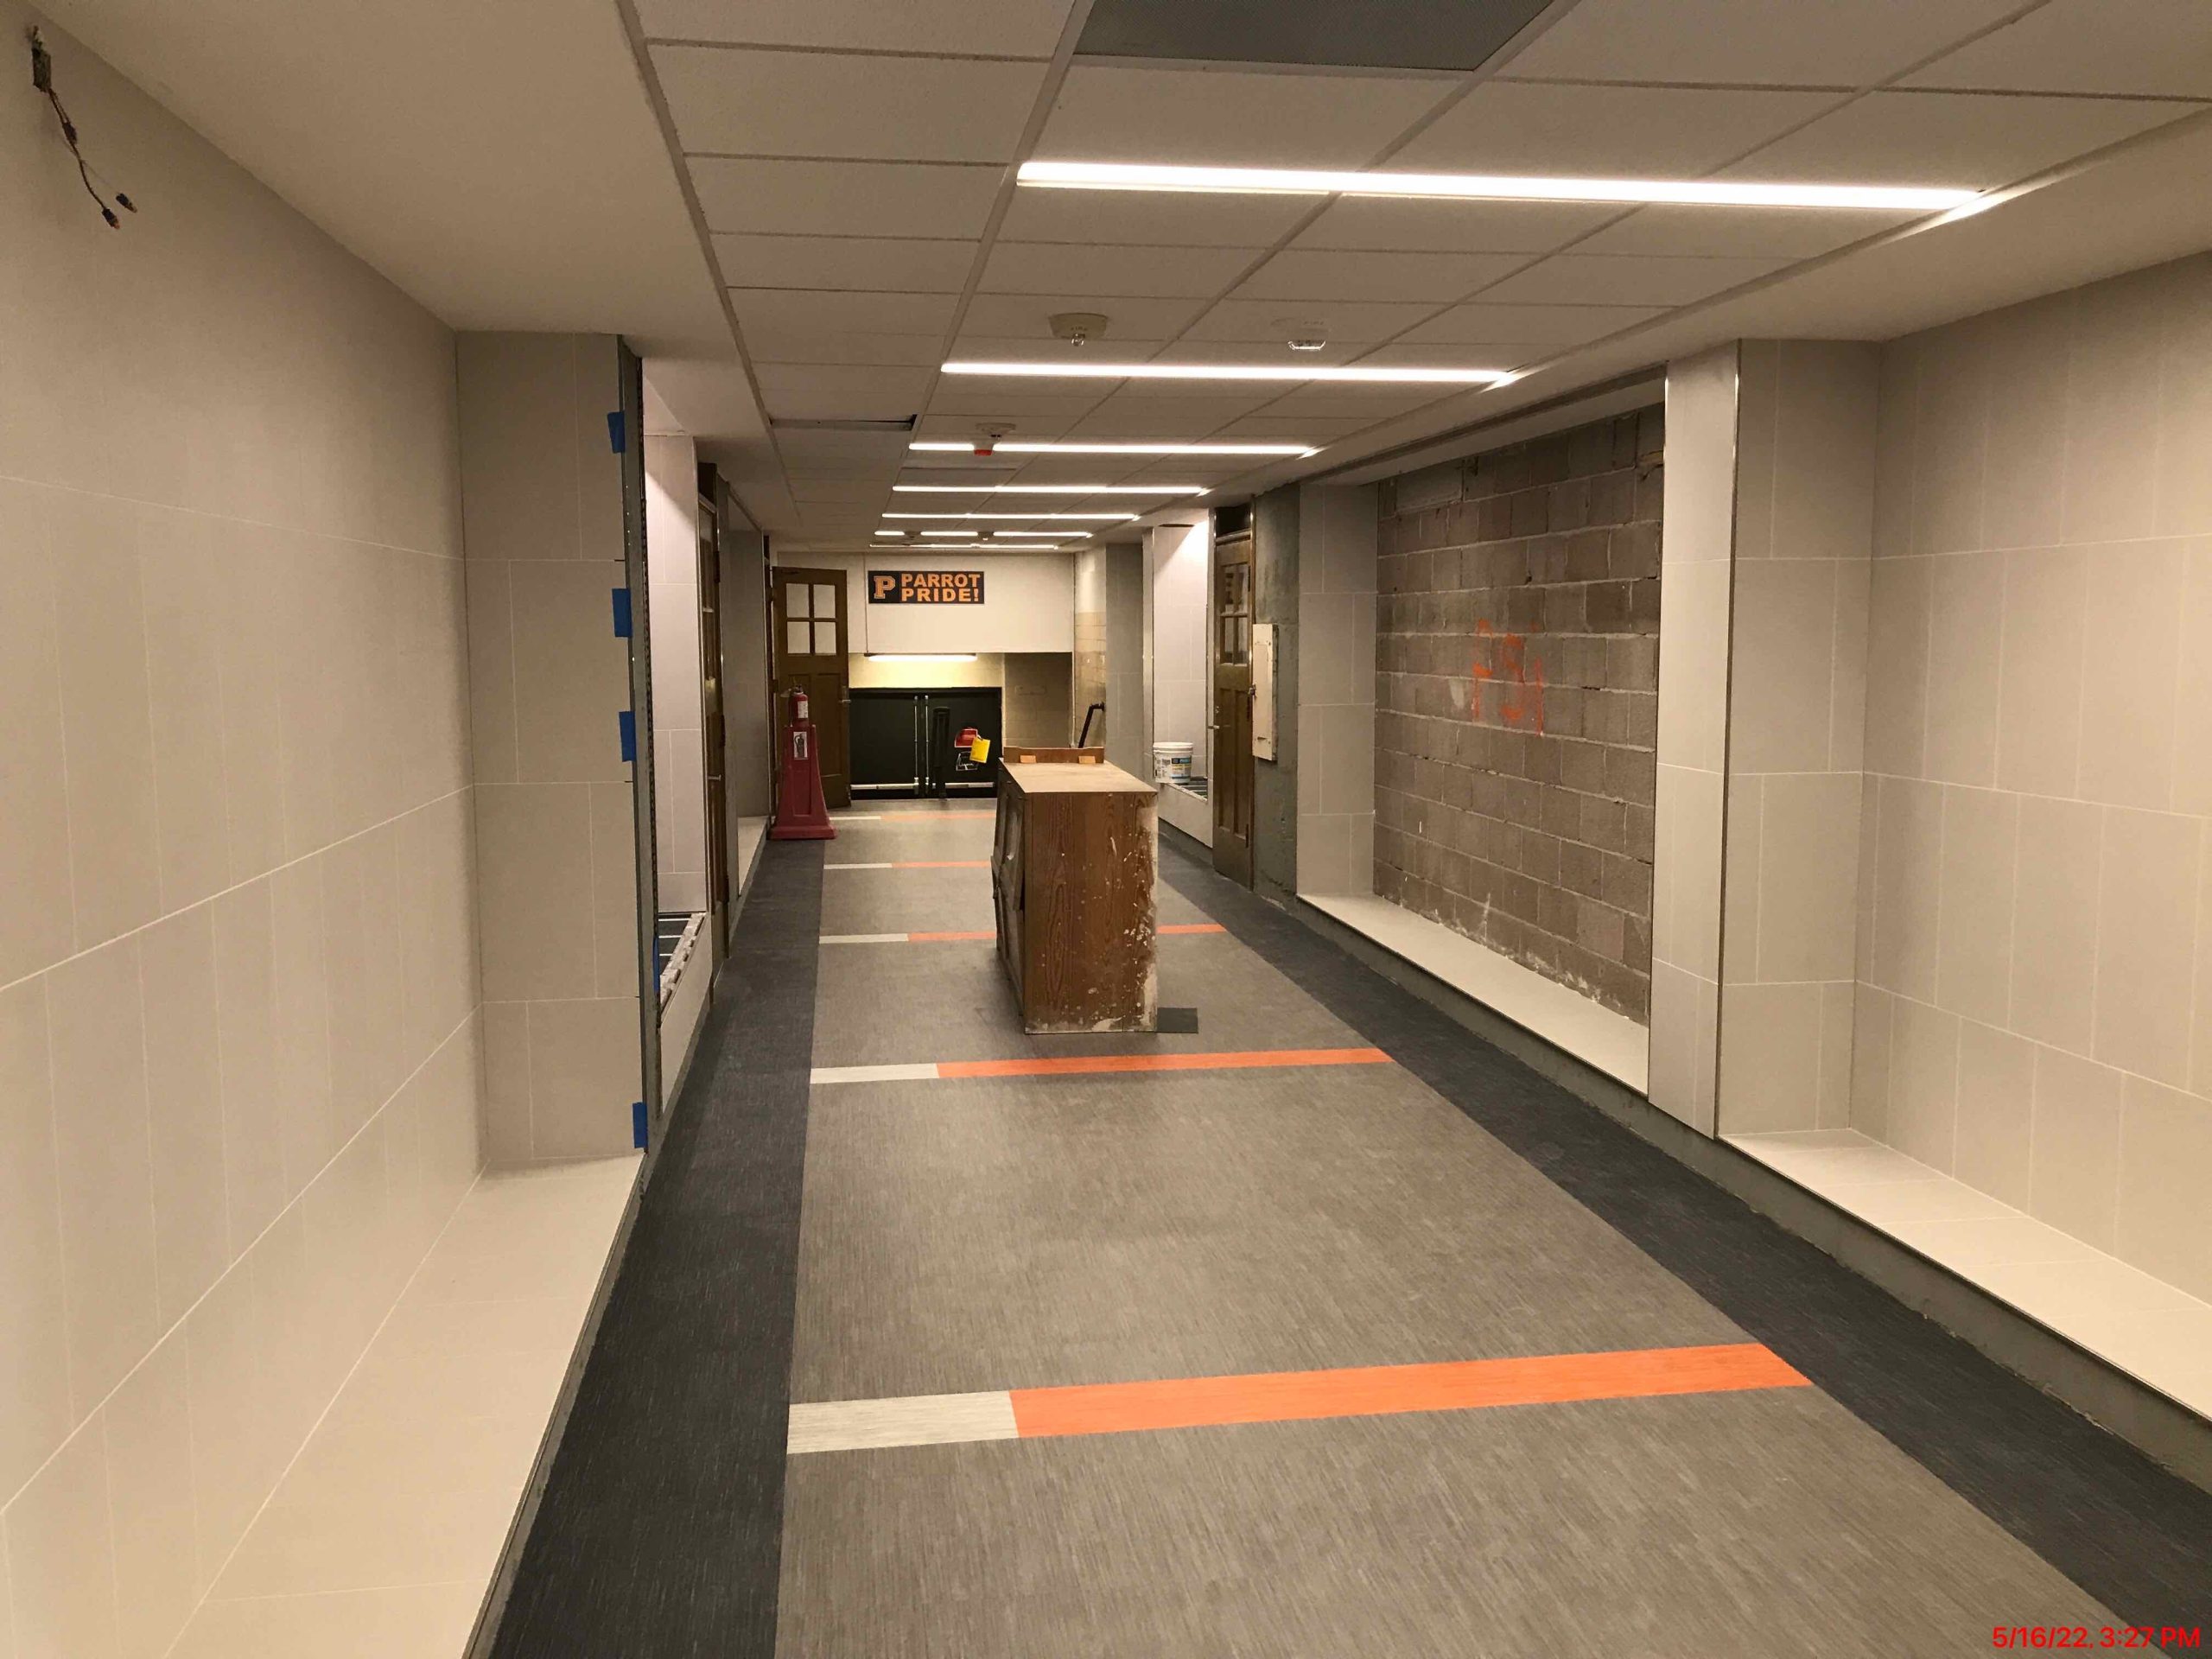 Corridor & Classroom Progress image 0